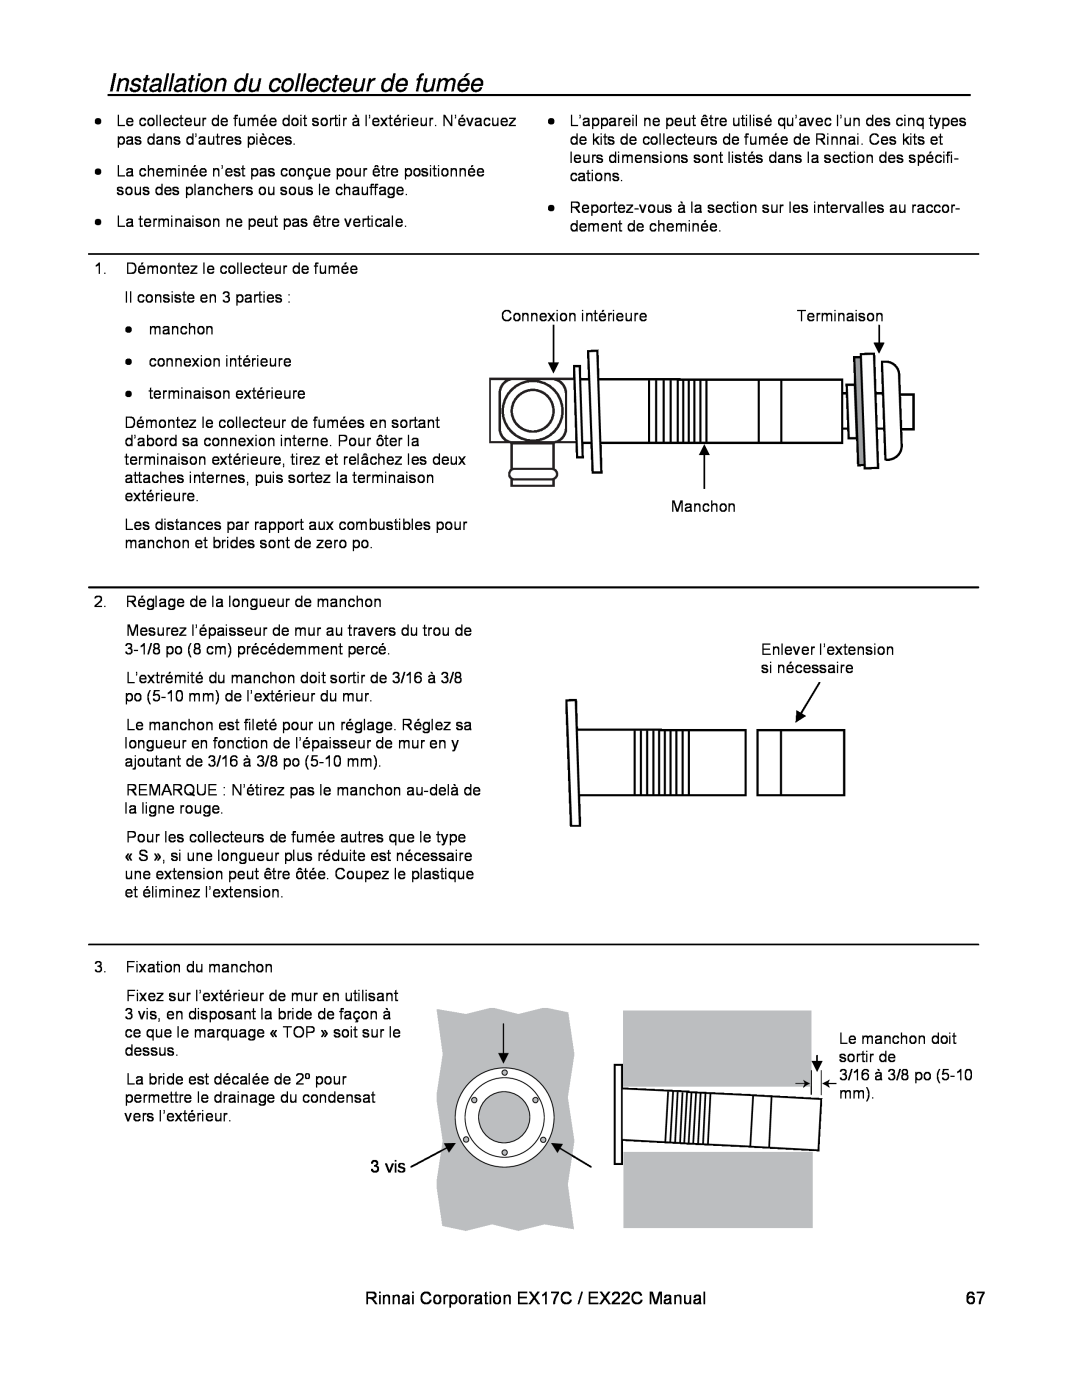 Rinnai installation manual Installation du collecteur de fumée, 3 vis, Rinnai Corporation EX17C / EX22C Manual 